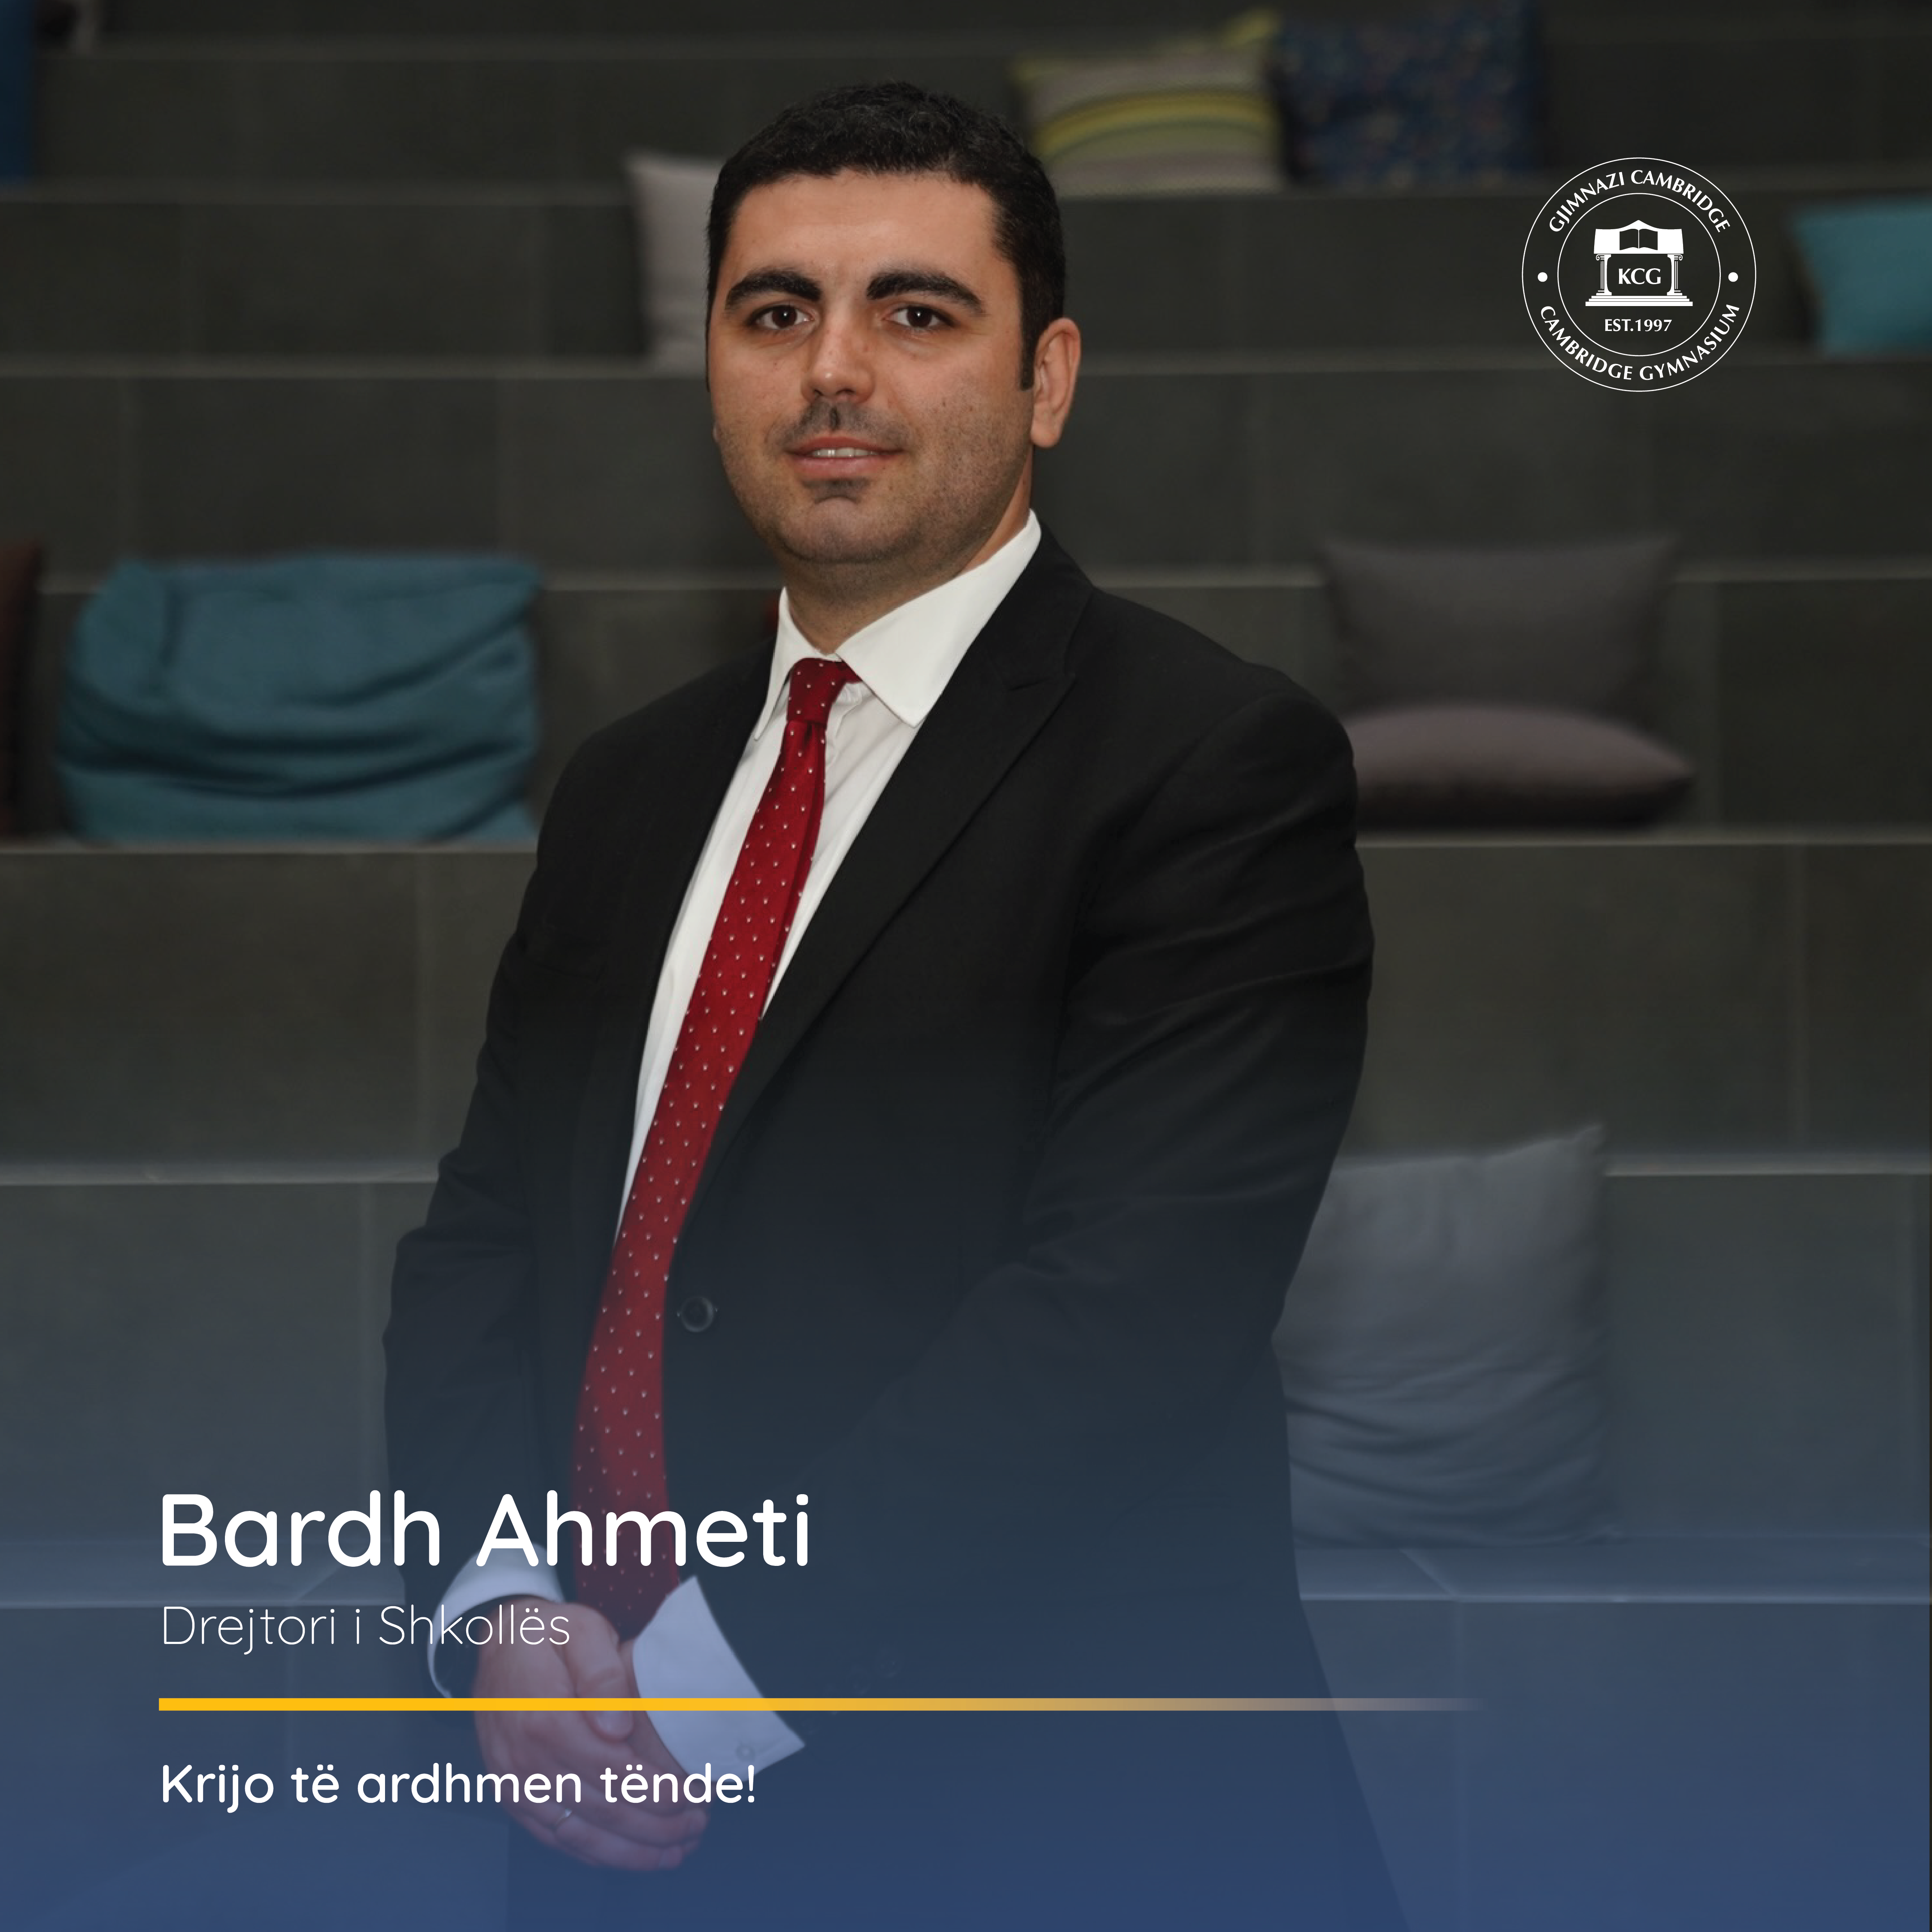 Bardh Ahmeti